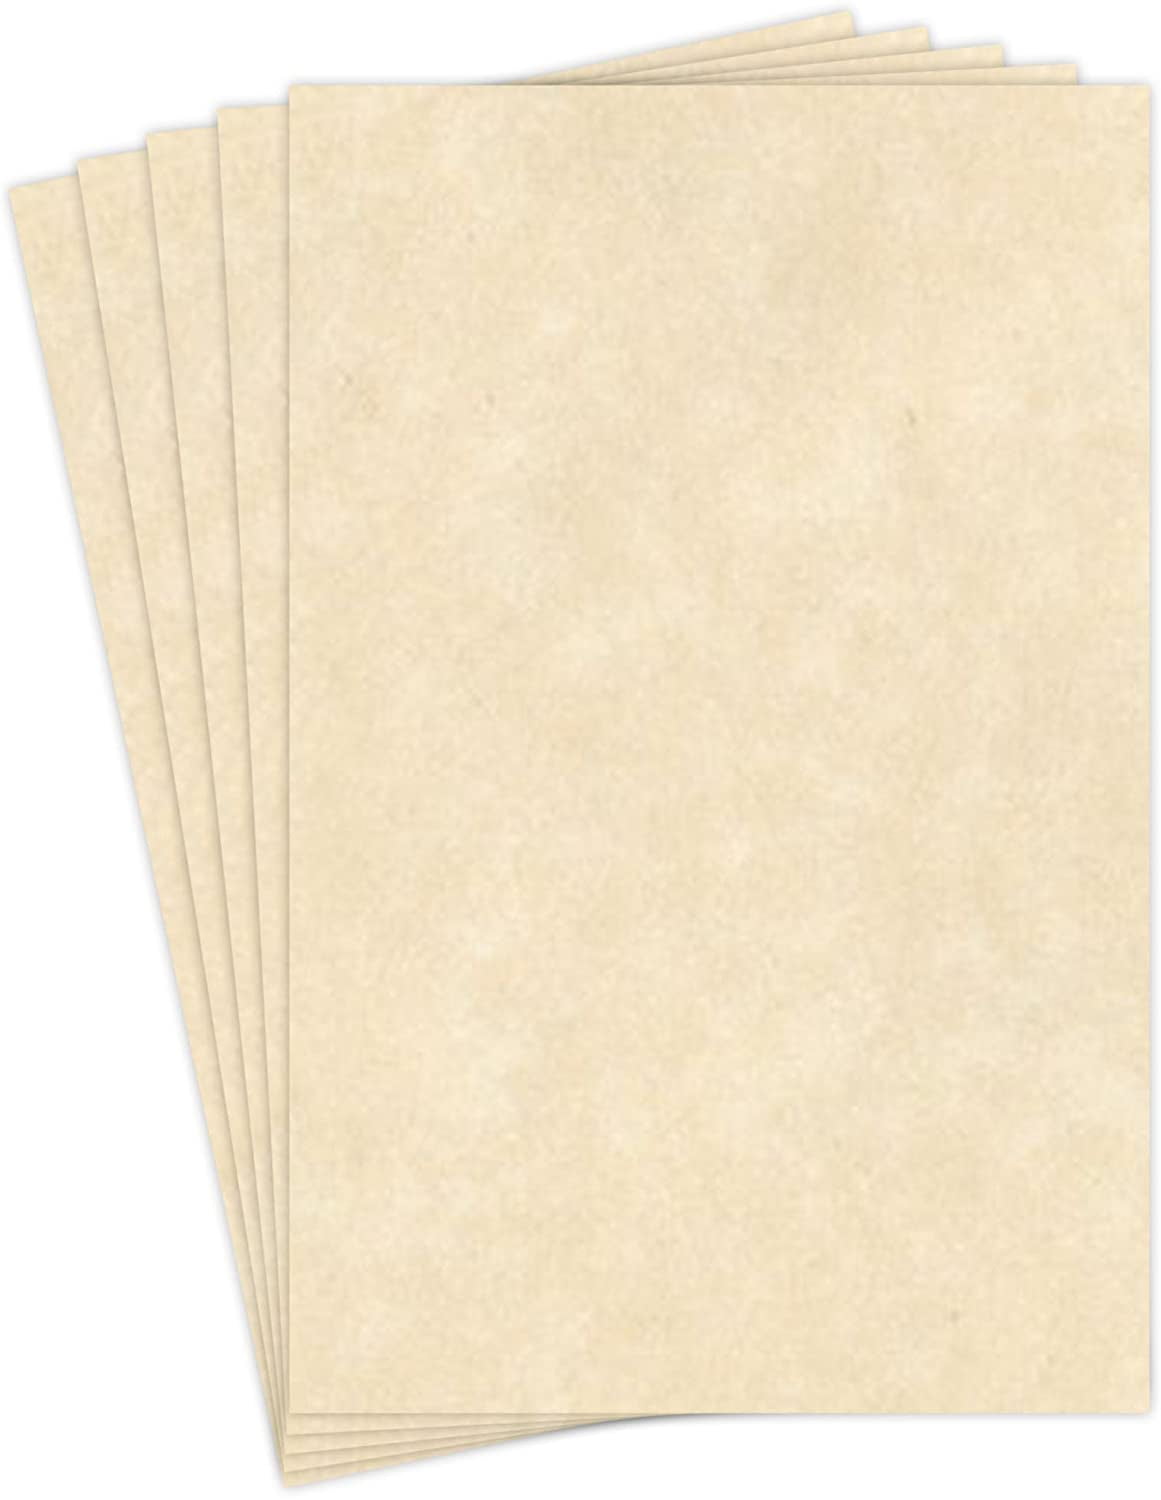 8.5 x 11" Mohawk Skytone New White Vellum Parchment Paper 60lb Text 50 Sheets 